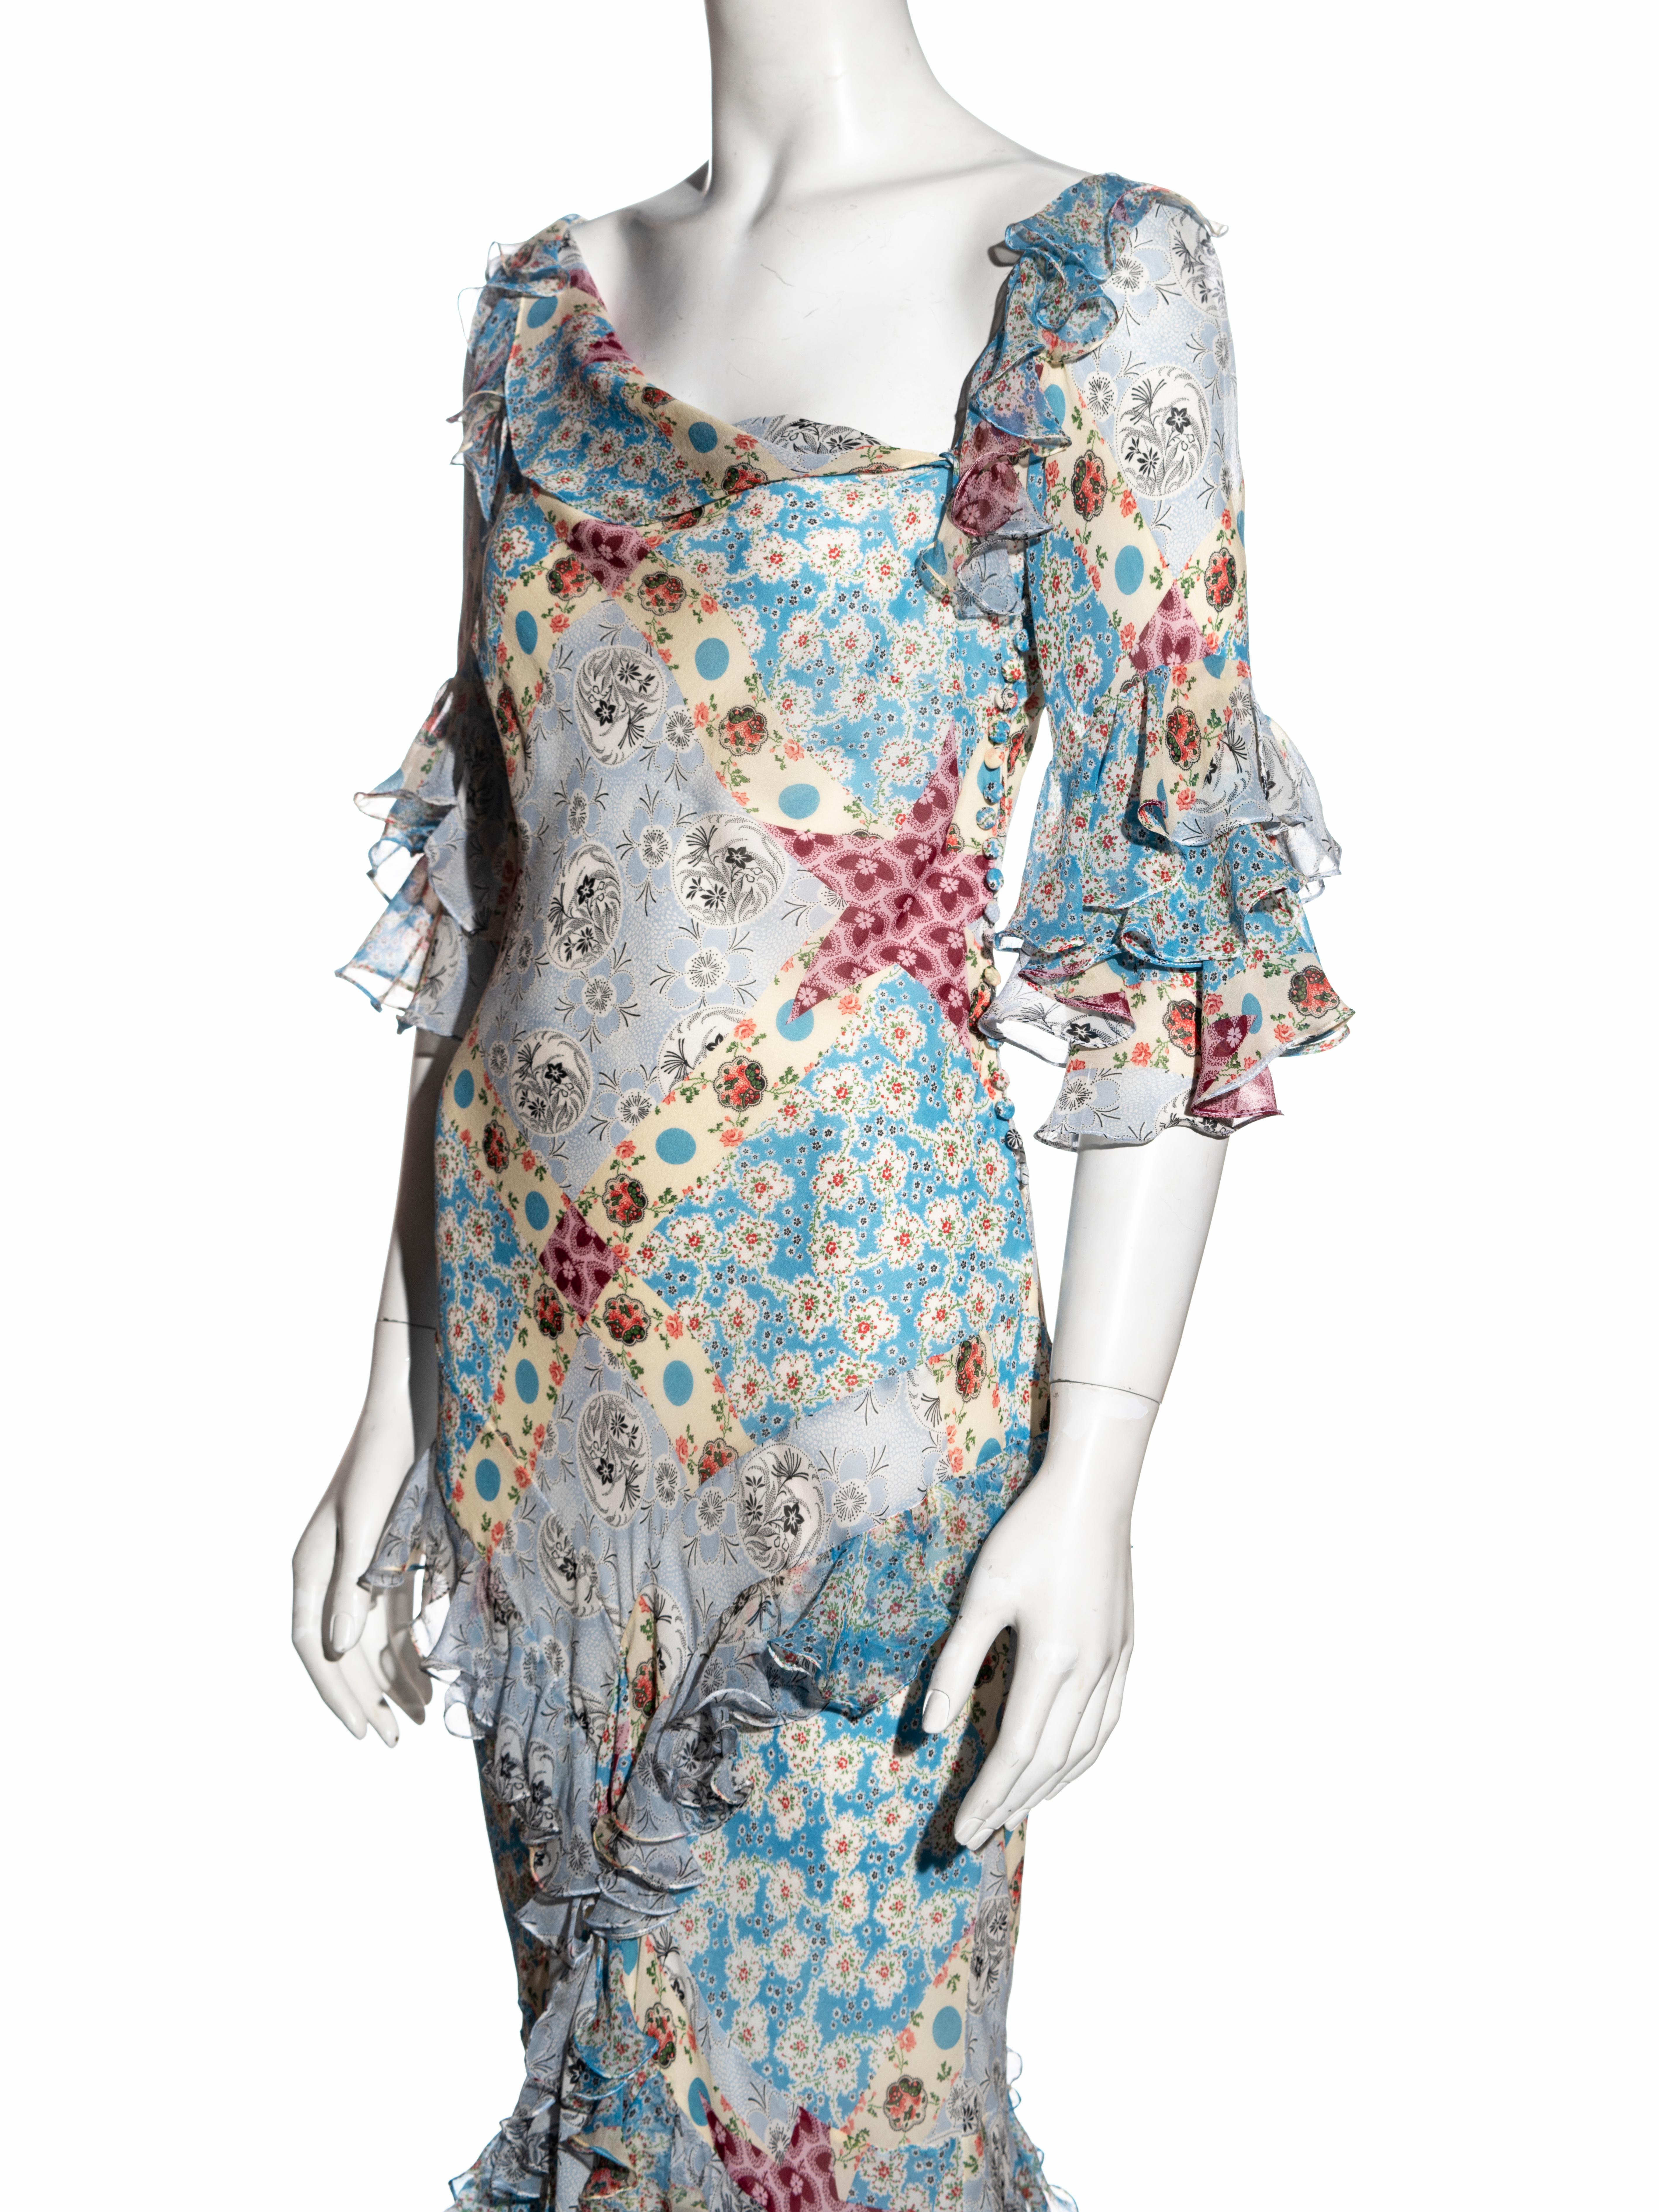 Gray John Galliano floral printed silk chiffon bias cut evening dress, fw 2002